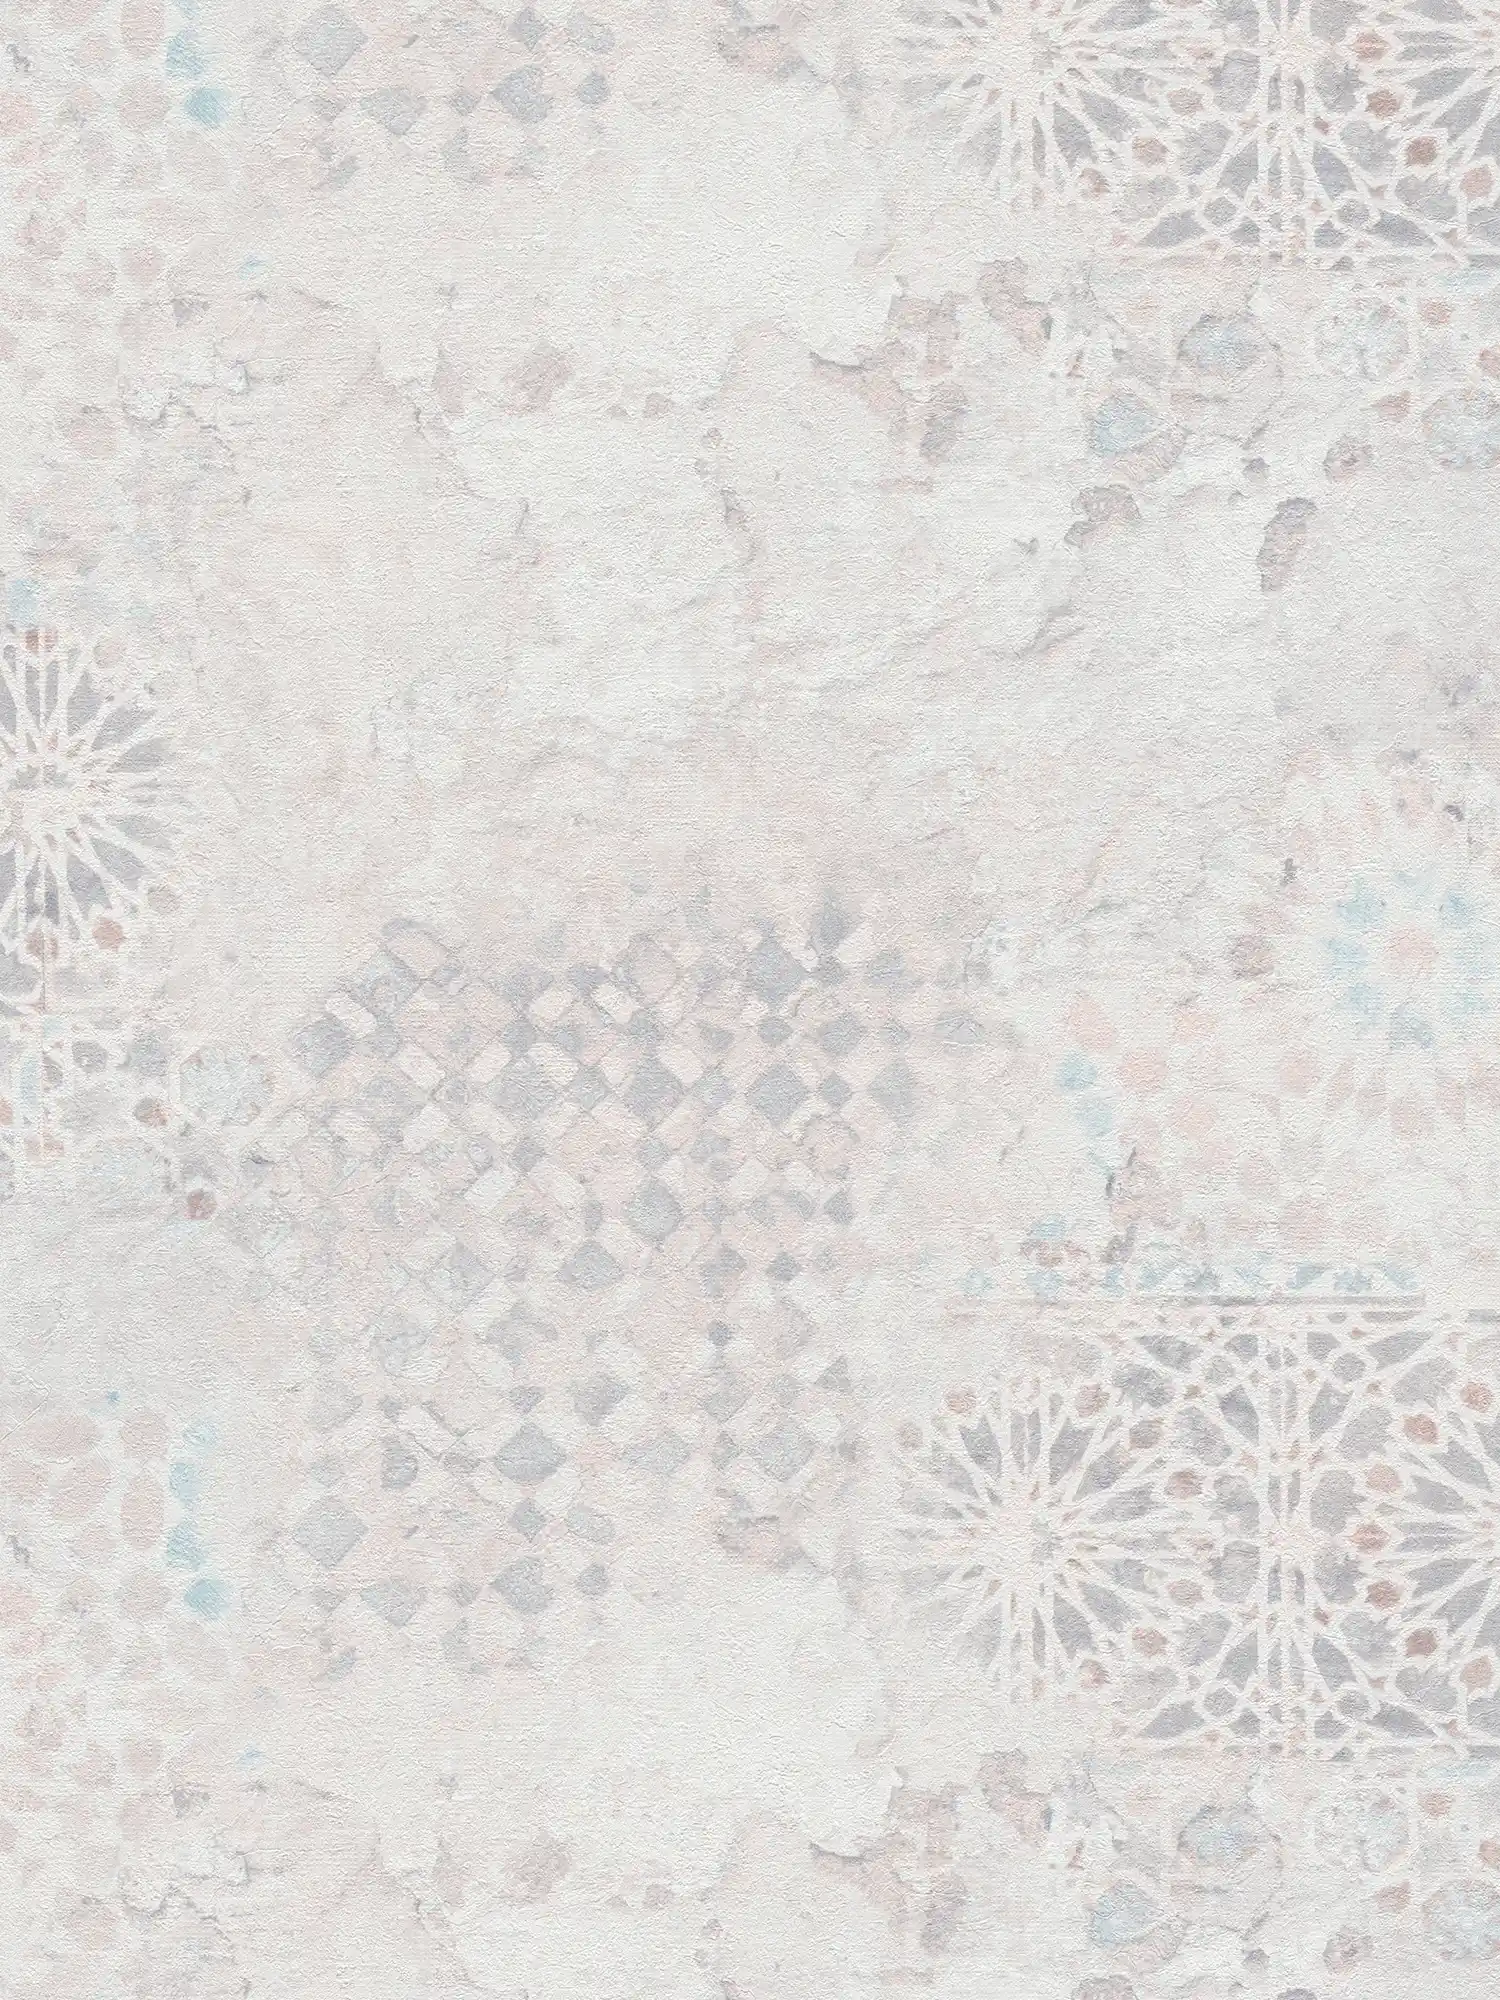 Mustertapete mit Mosaik Design im Vintage Stil – Grau, Grün, Lila
